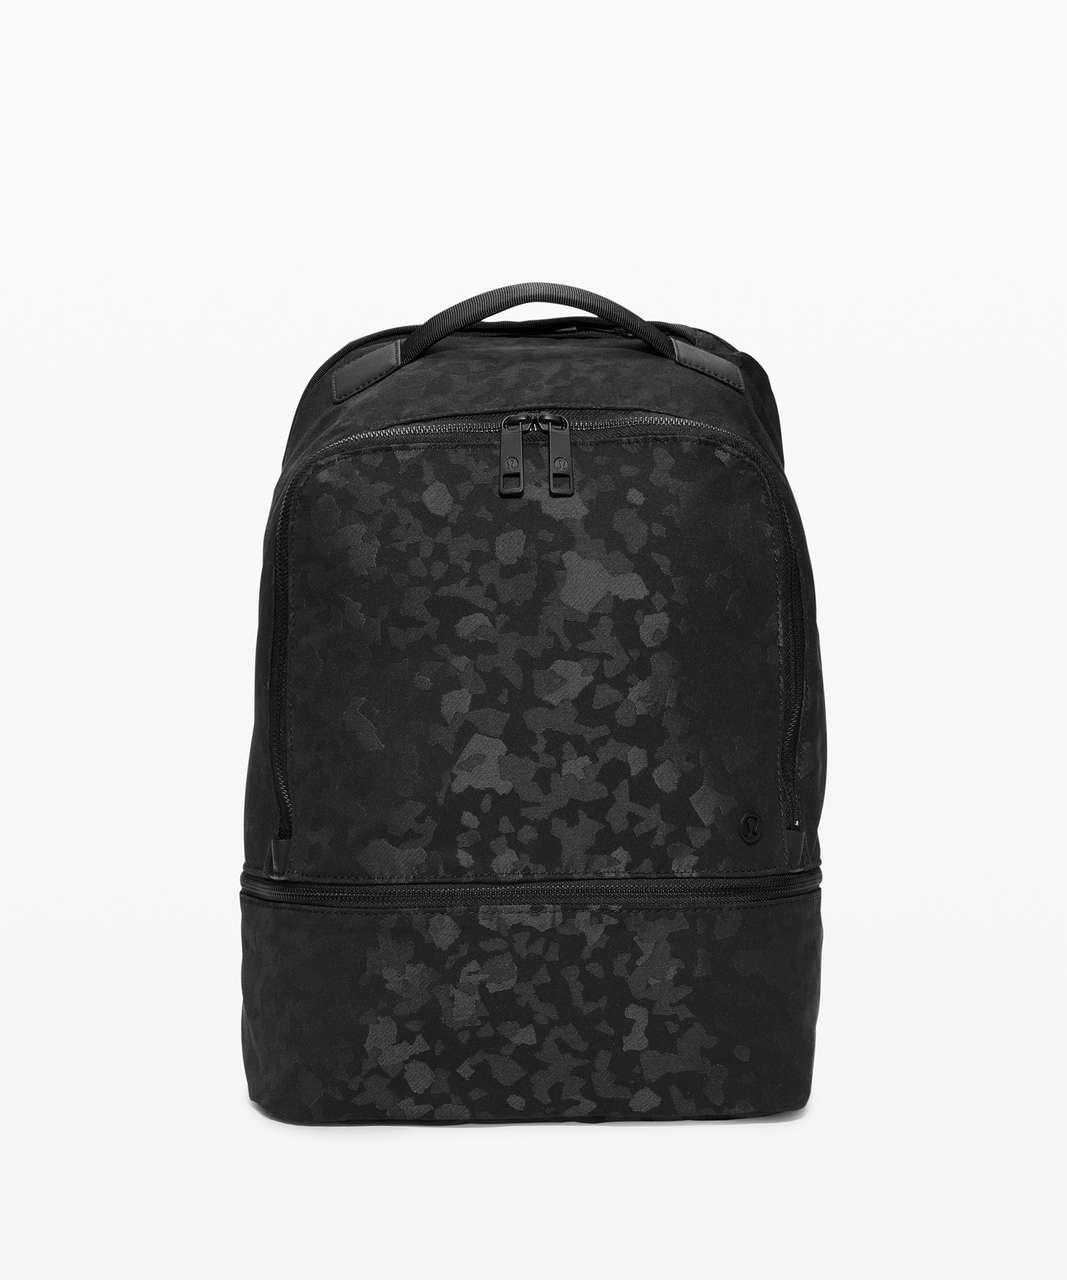 Lululemon City Adventurer Backpack *17L - Fragment Camo Jacquard Black Deep Coal